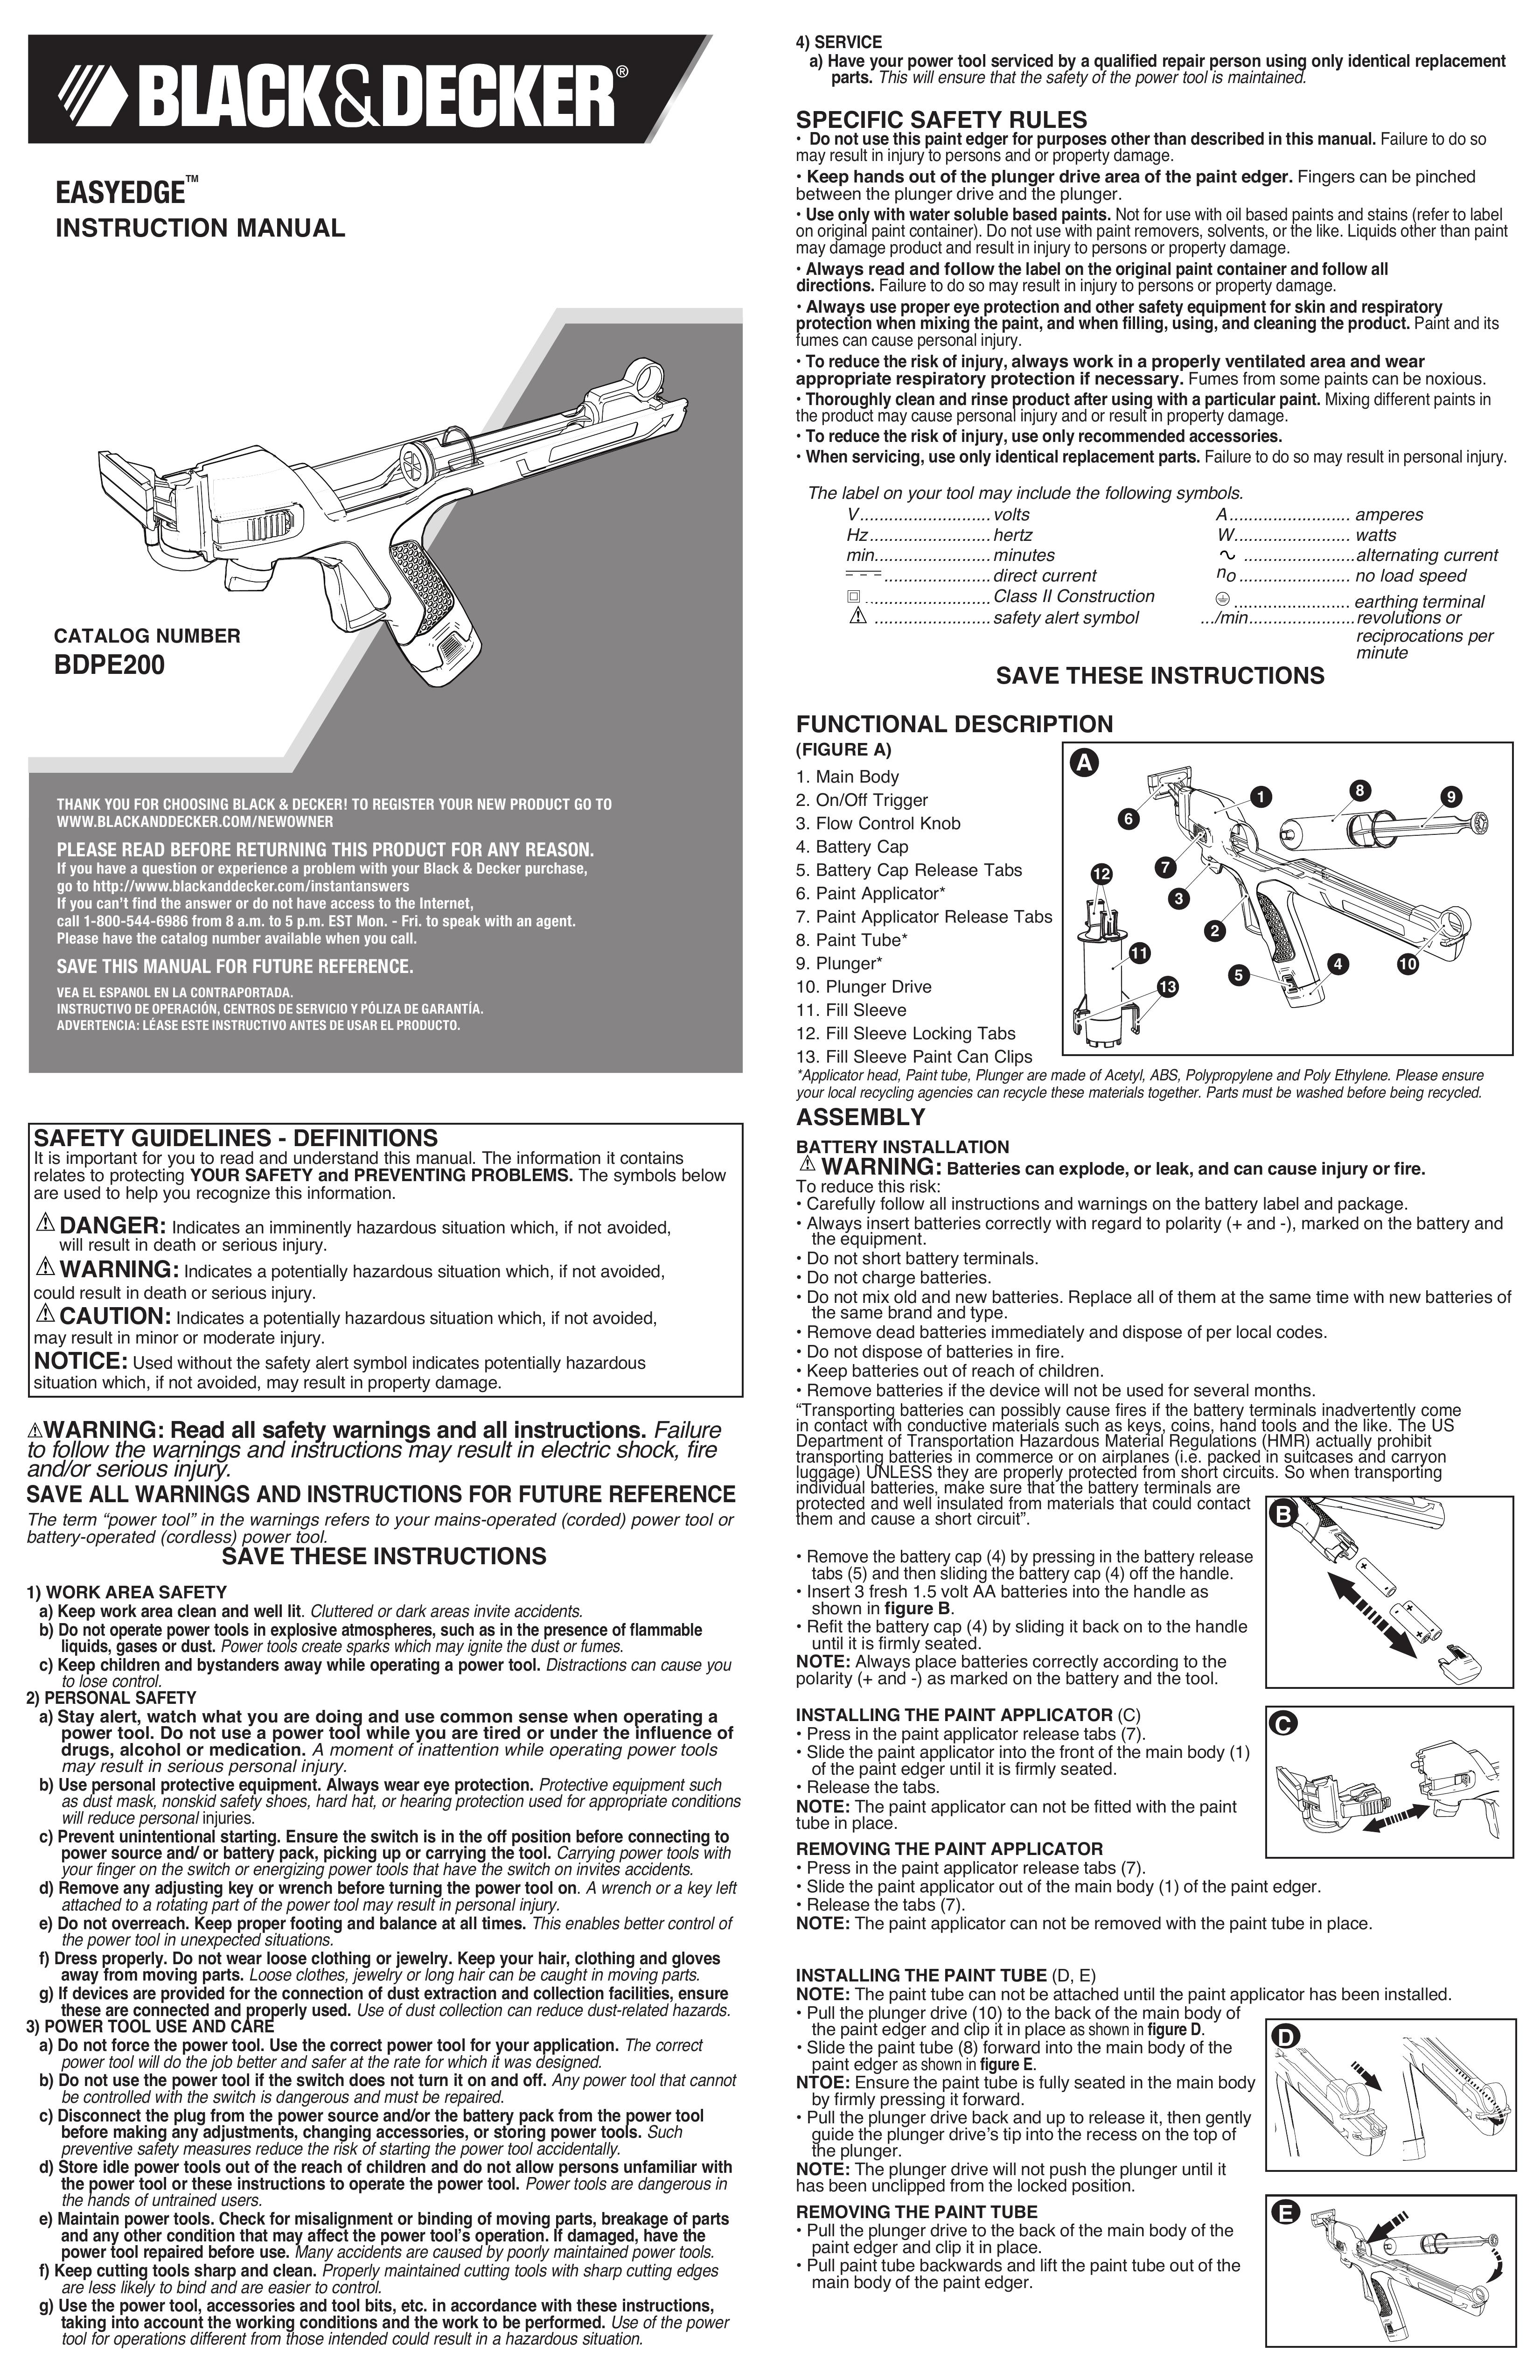 Black & Decker BDPE200B Edger User Manual